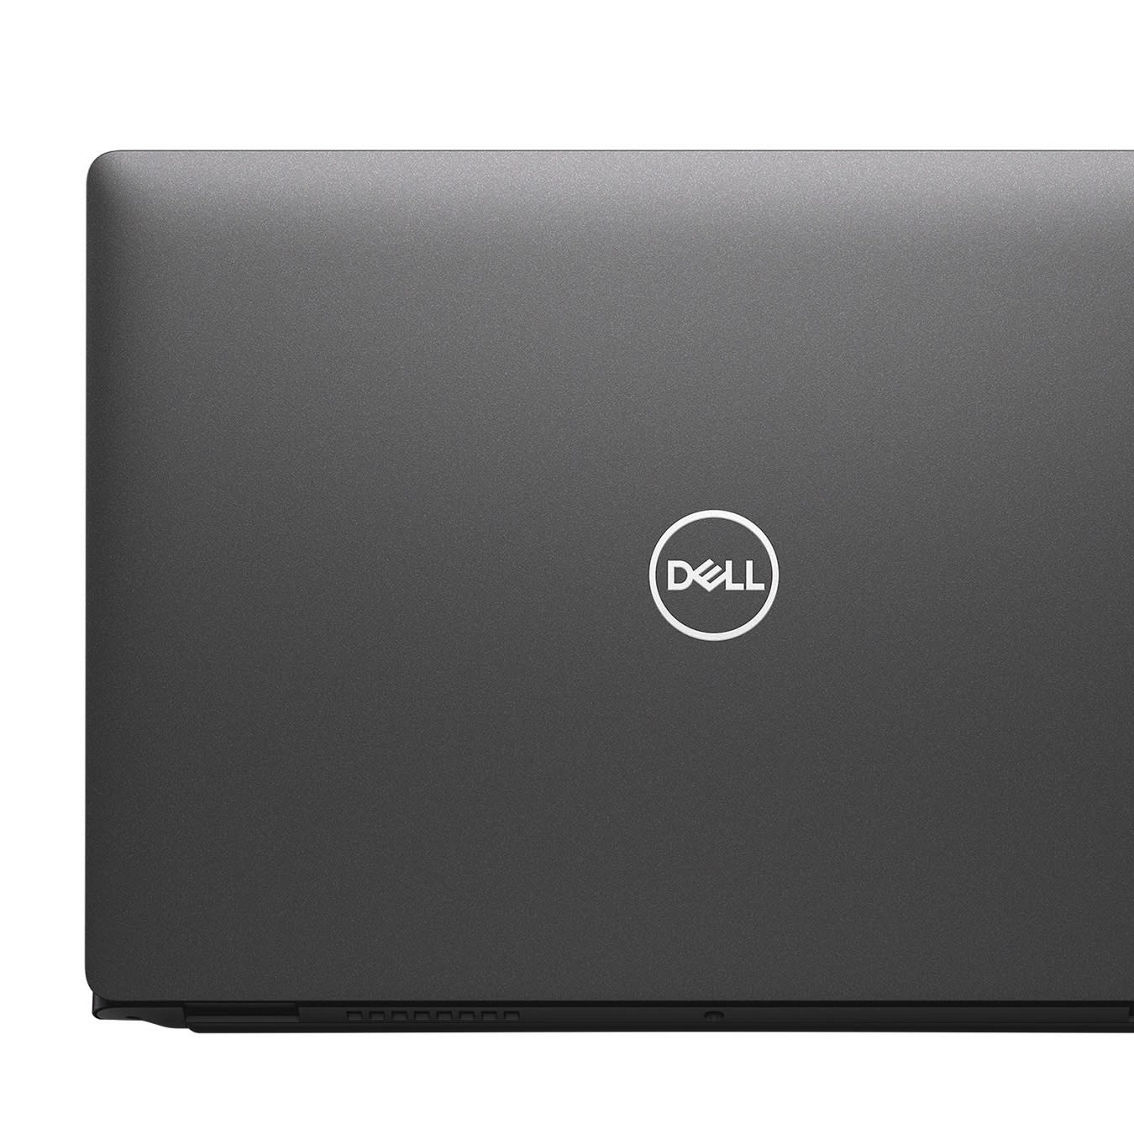 Dell 5300 Core i5-8365U 1.6GHz 16GB Ram 256GB SSD Laptop (Refurbished) - Image 2 of 5